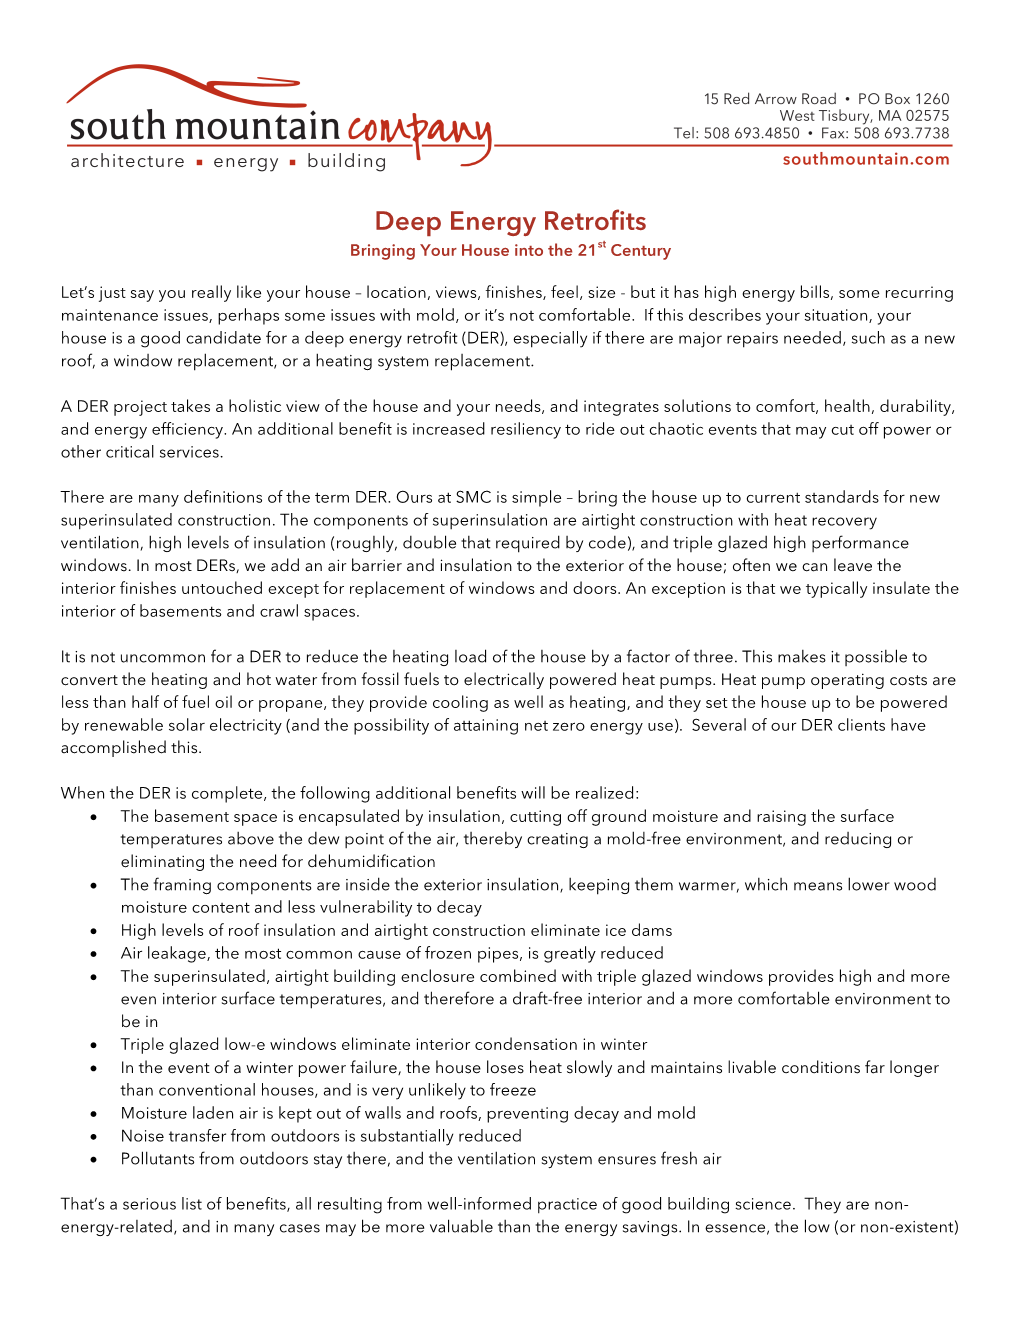 Deep Energy Retrofits Bringing Your House Into the 21St Century